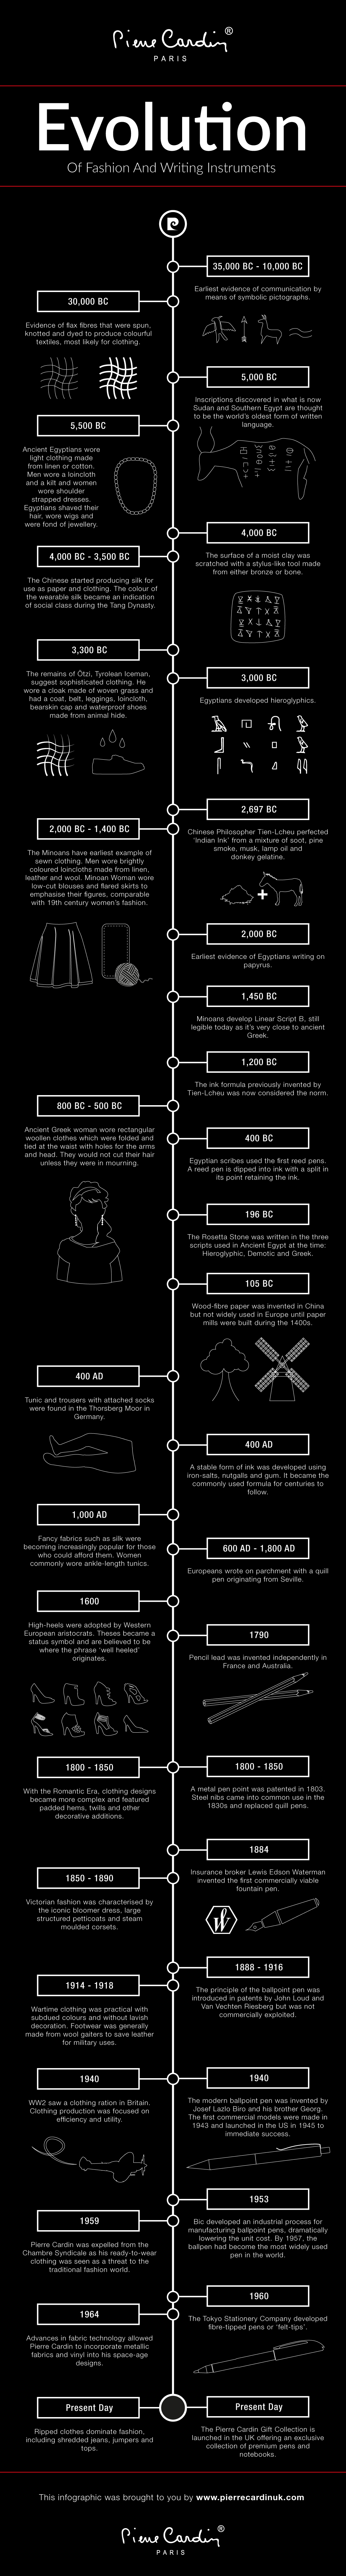 Pierre Cardin Infographic